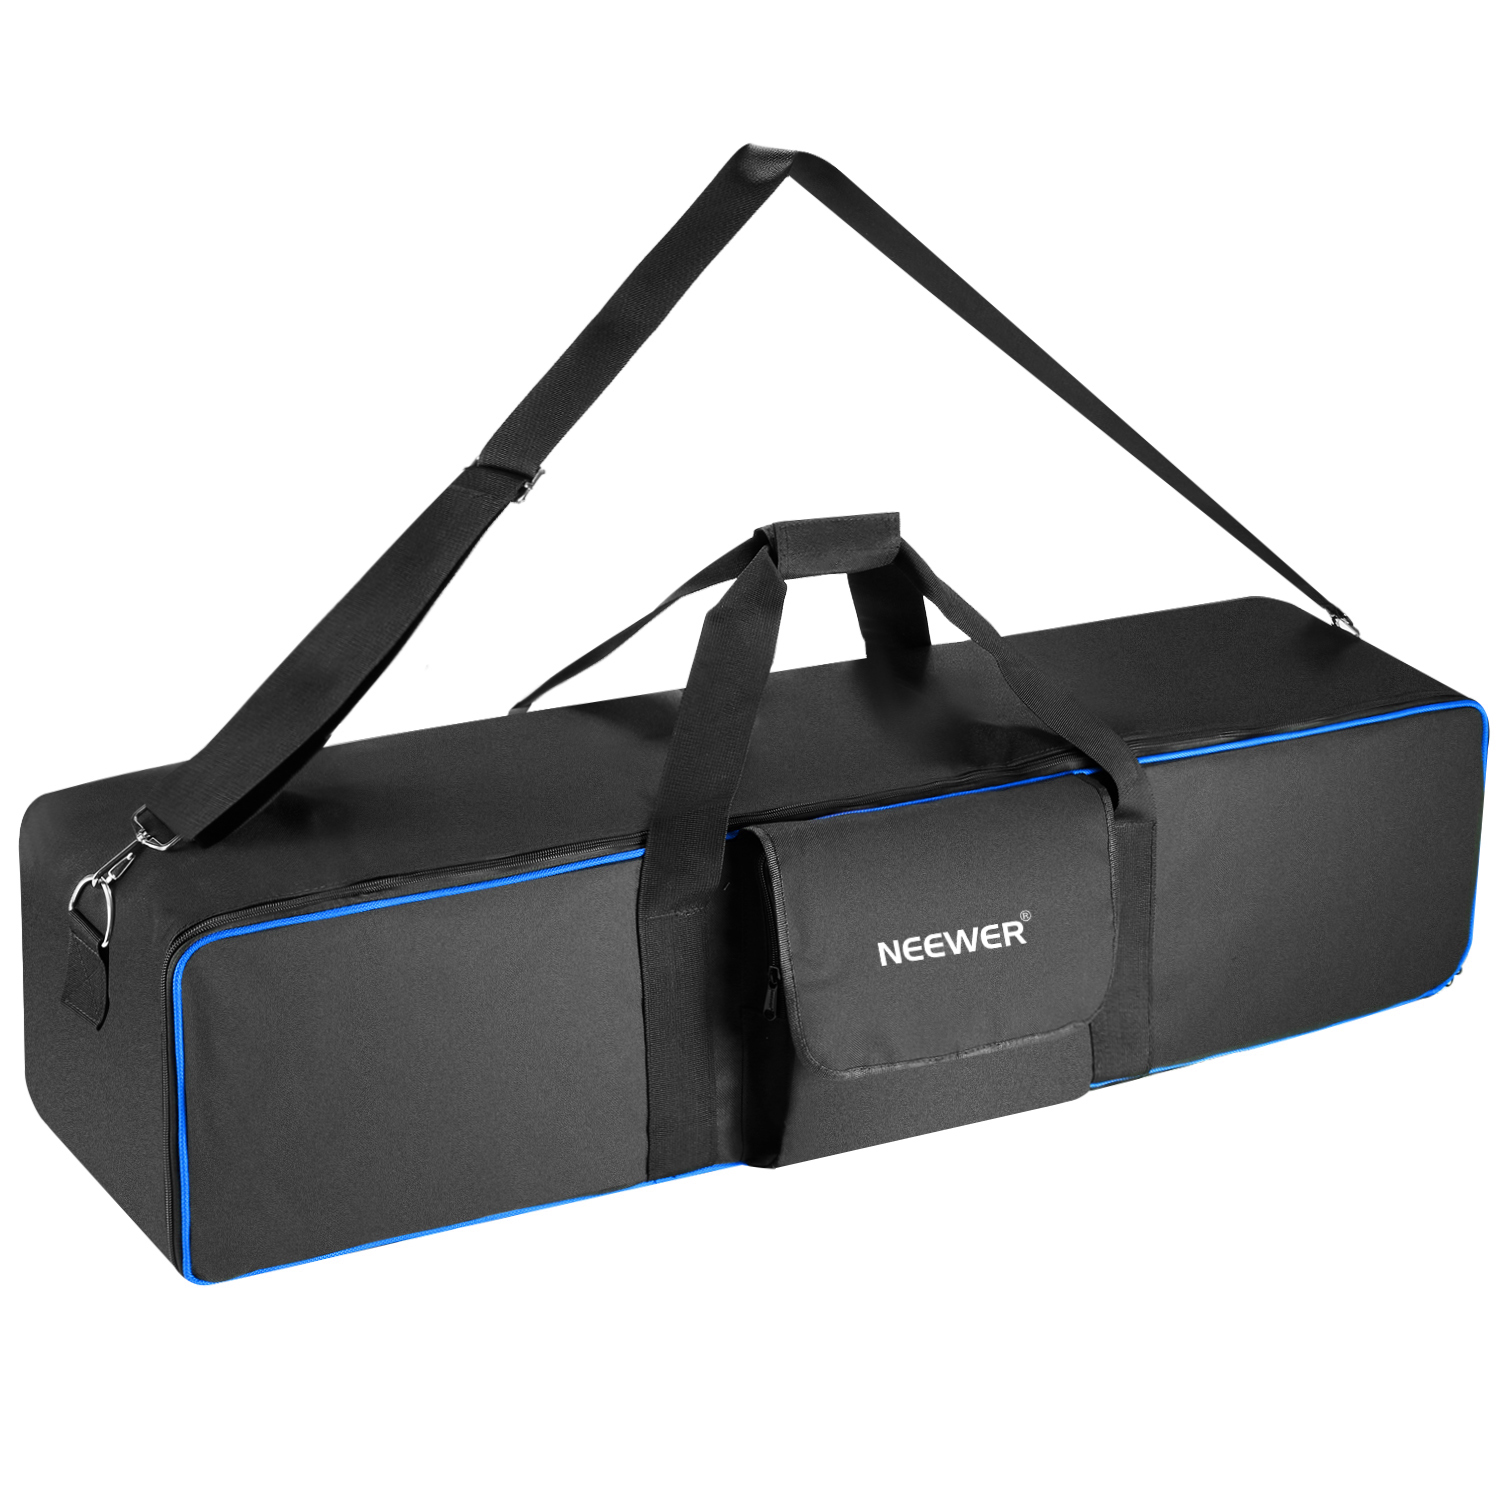 NEEWER 撮影用バッグ】簡潔で実用的なデザインで、カメラや照明機材